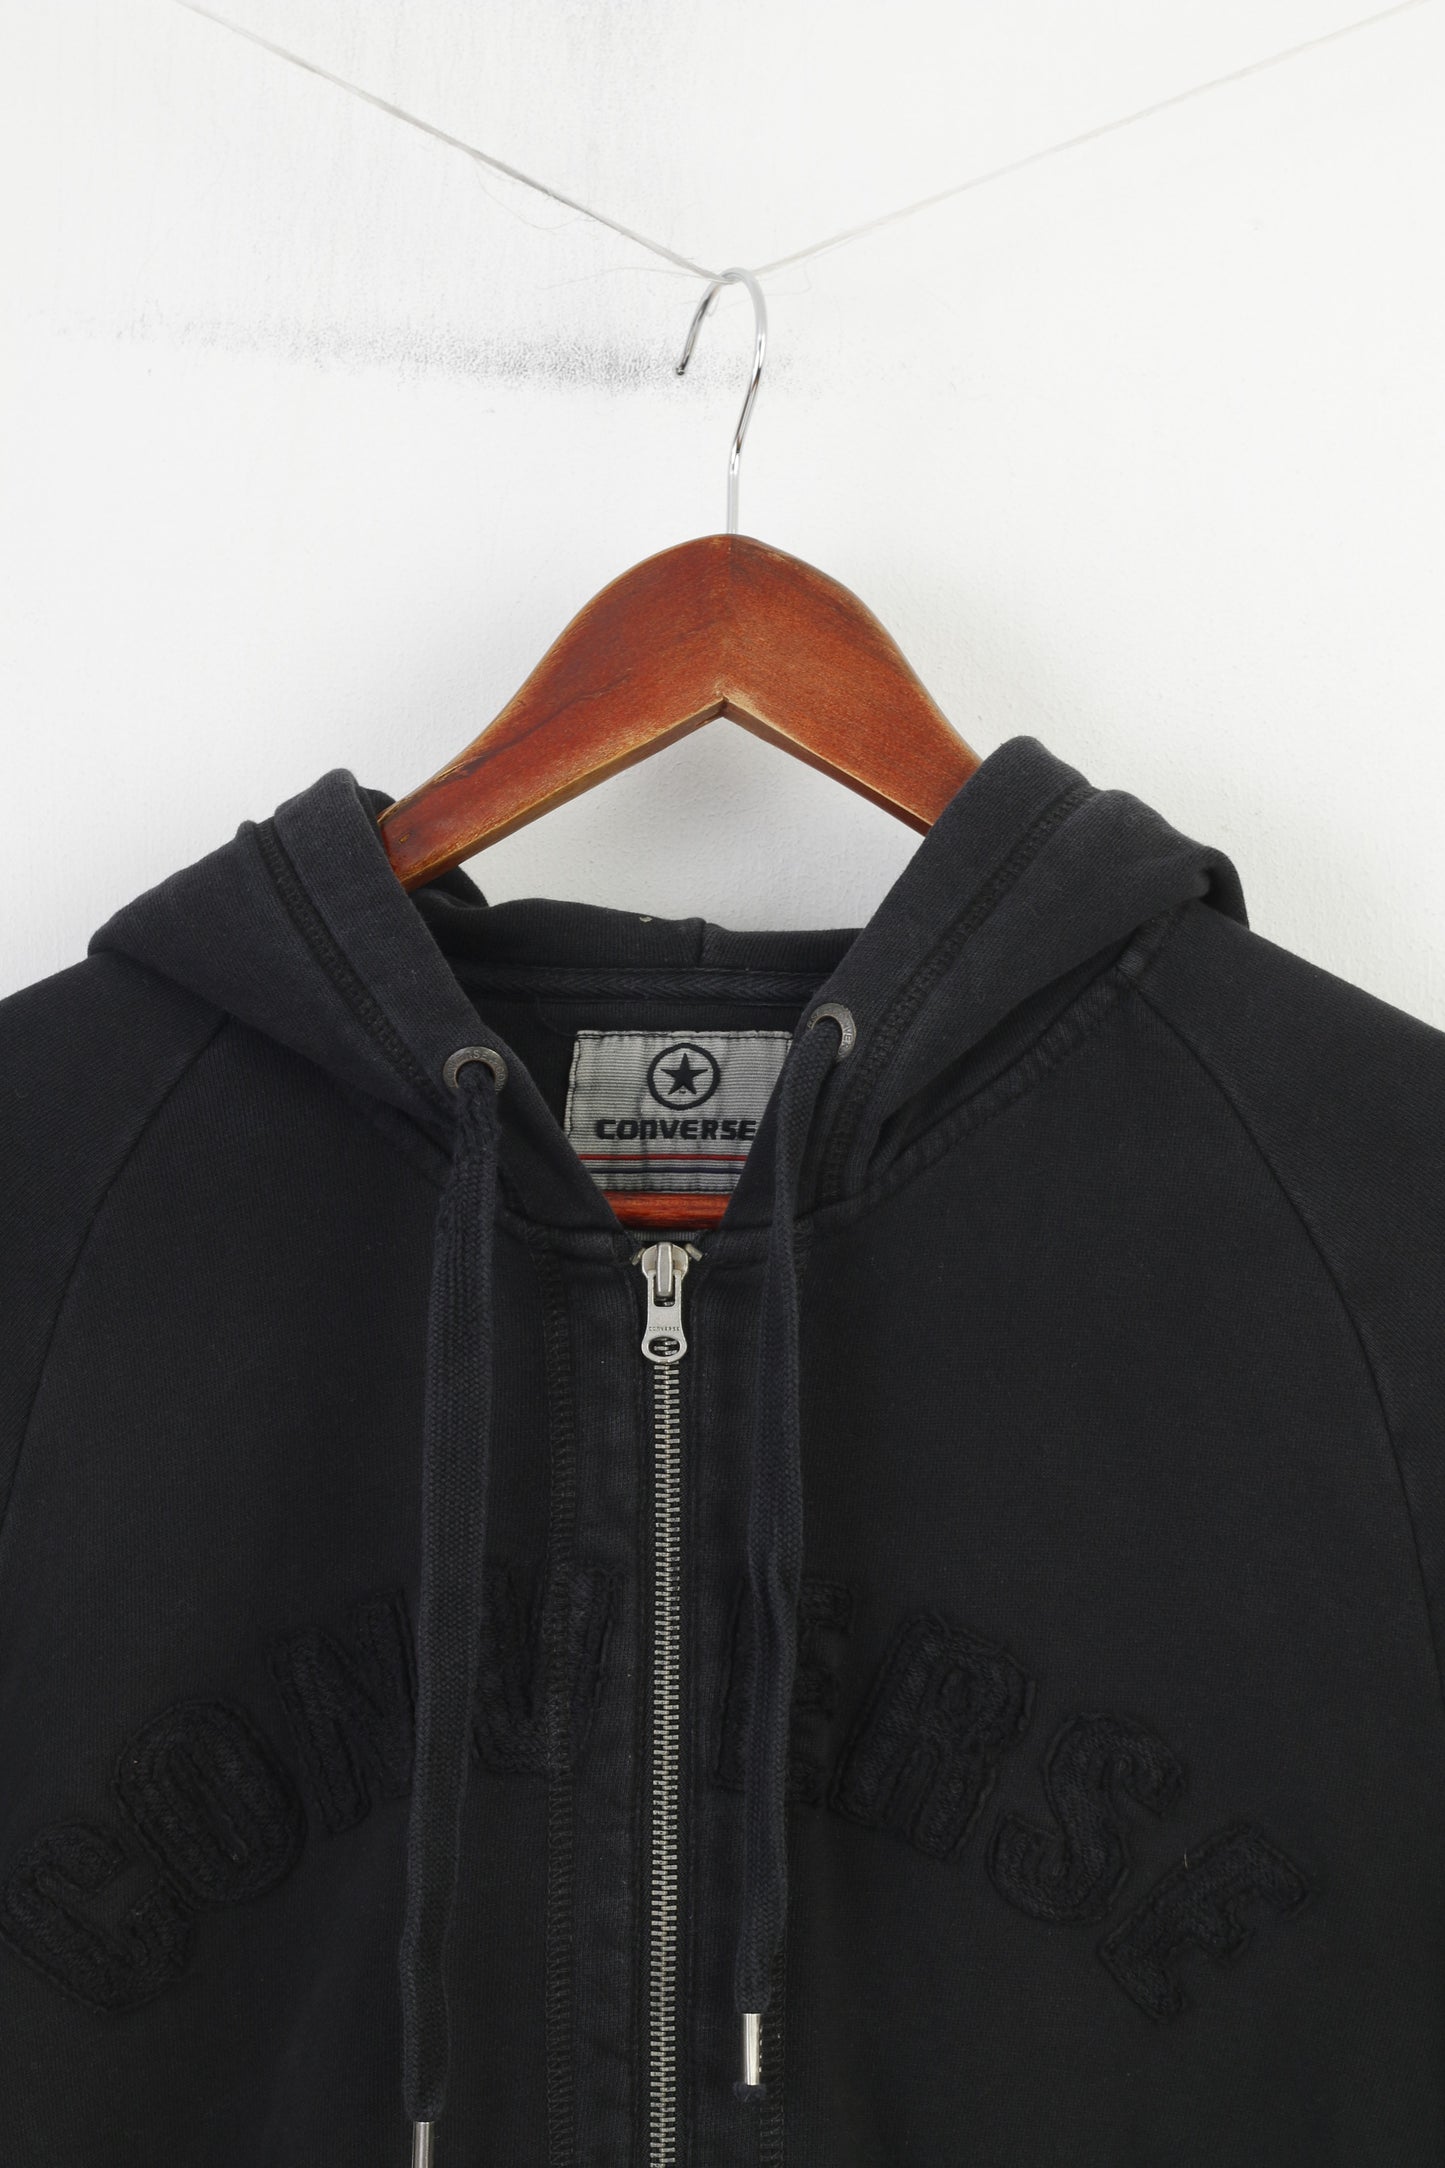 Converse Men S Sweatshirt Black Cotton Full Zipper Hood Pockets Training Hoodie Vintage Sport Top